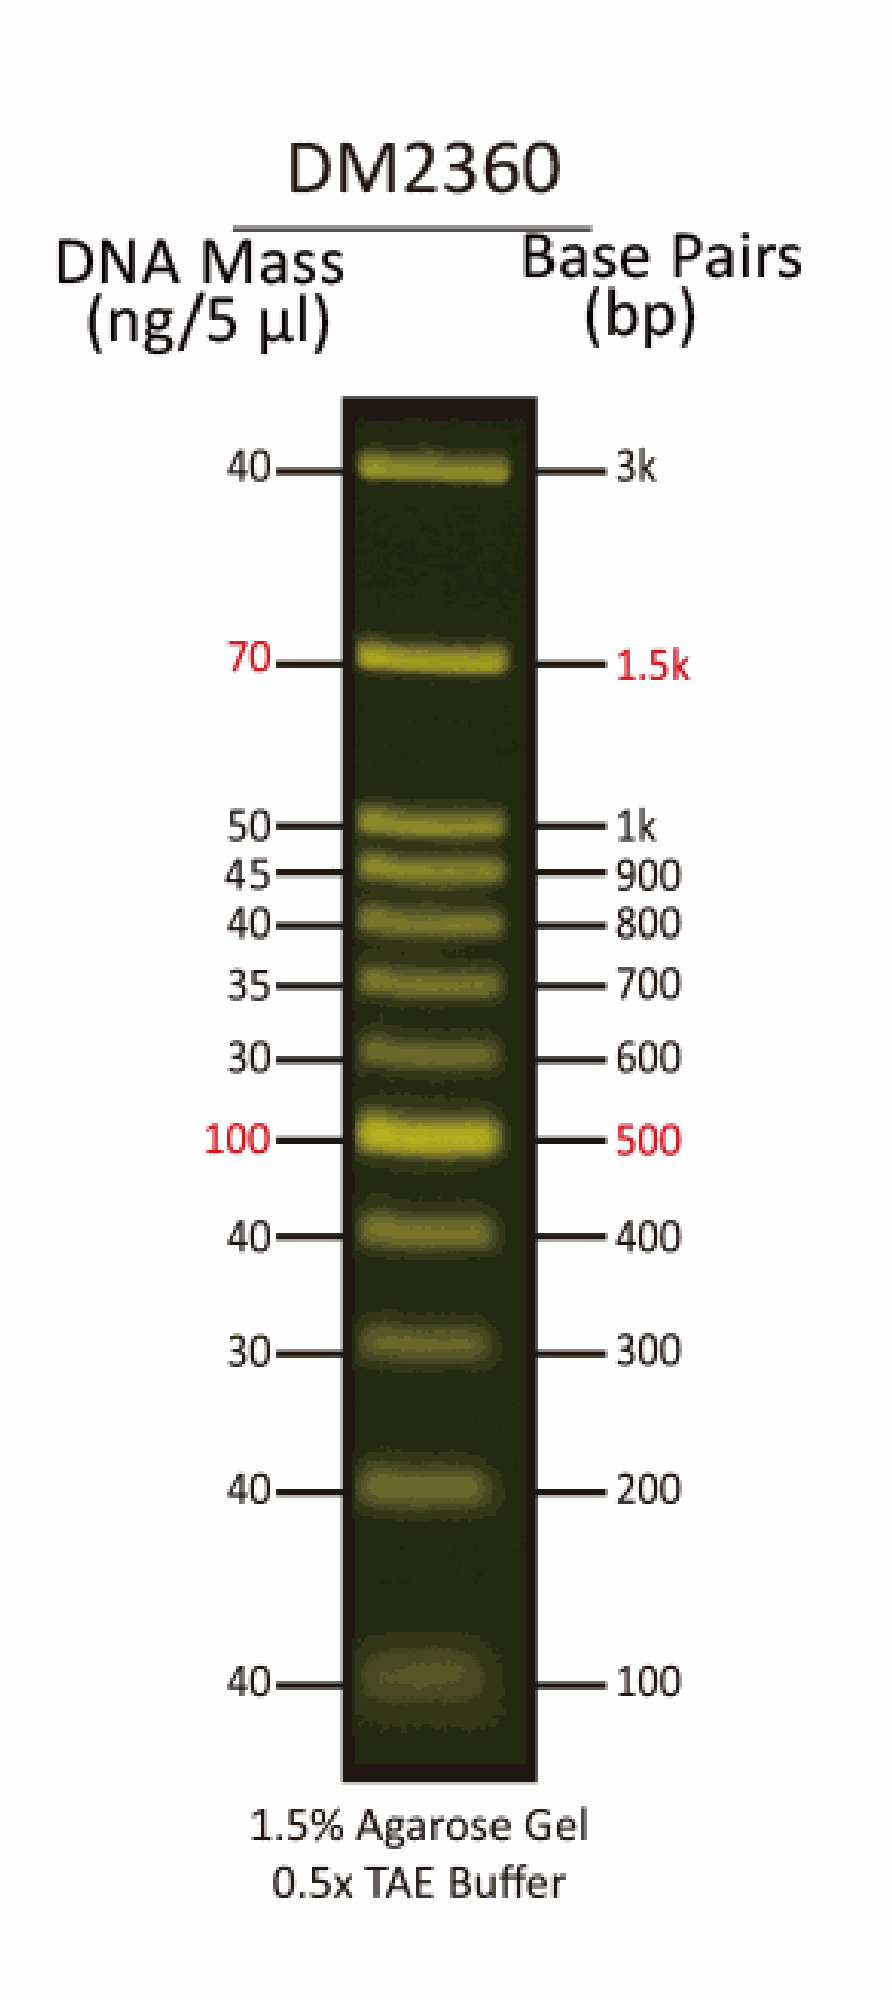 FluoroBand™ 100 bp+3K Fluorescent DNA Ladder, 500 μl